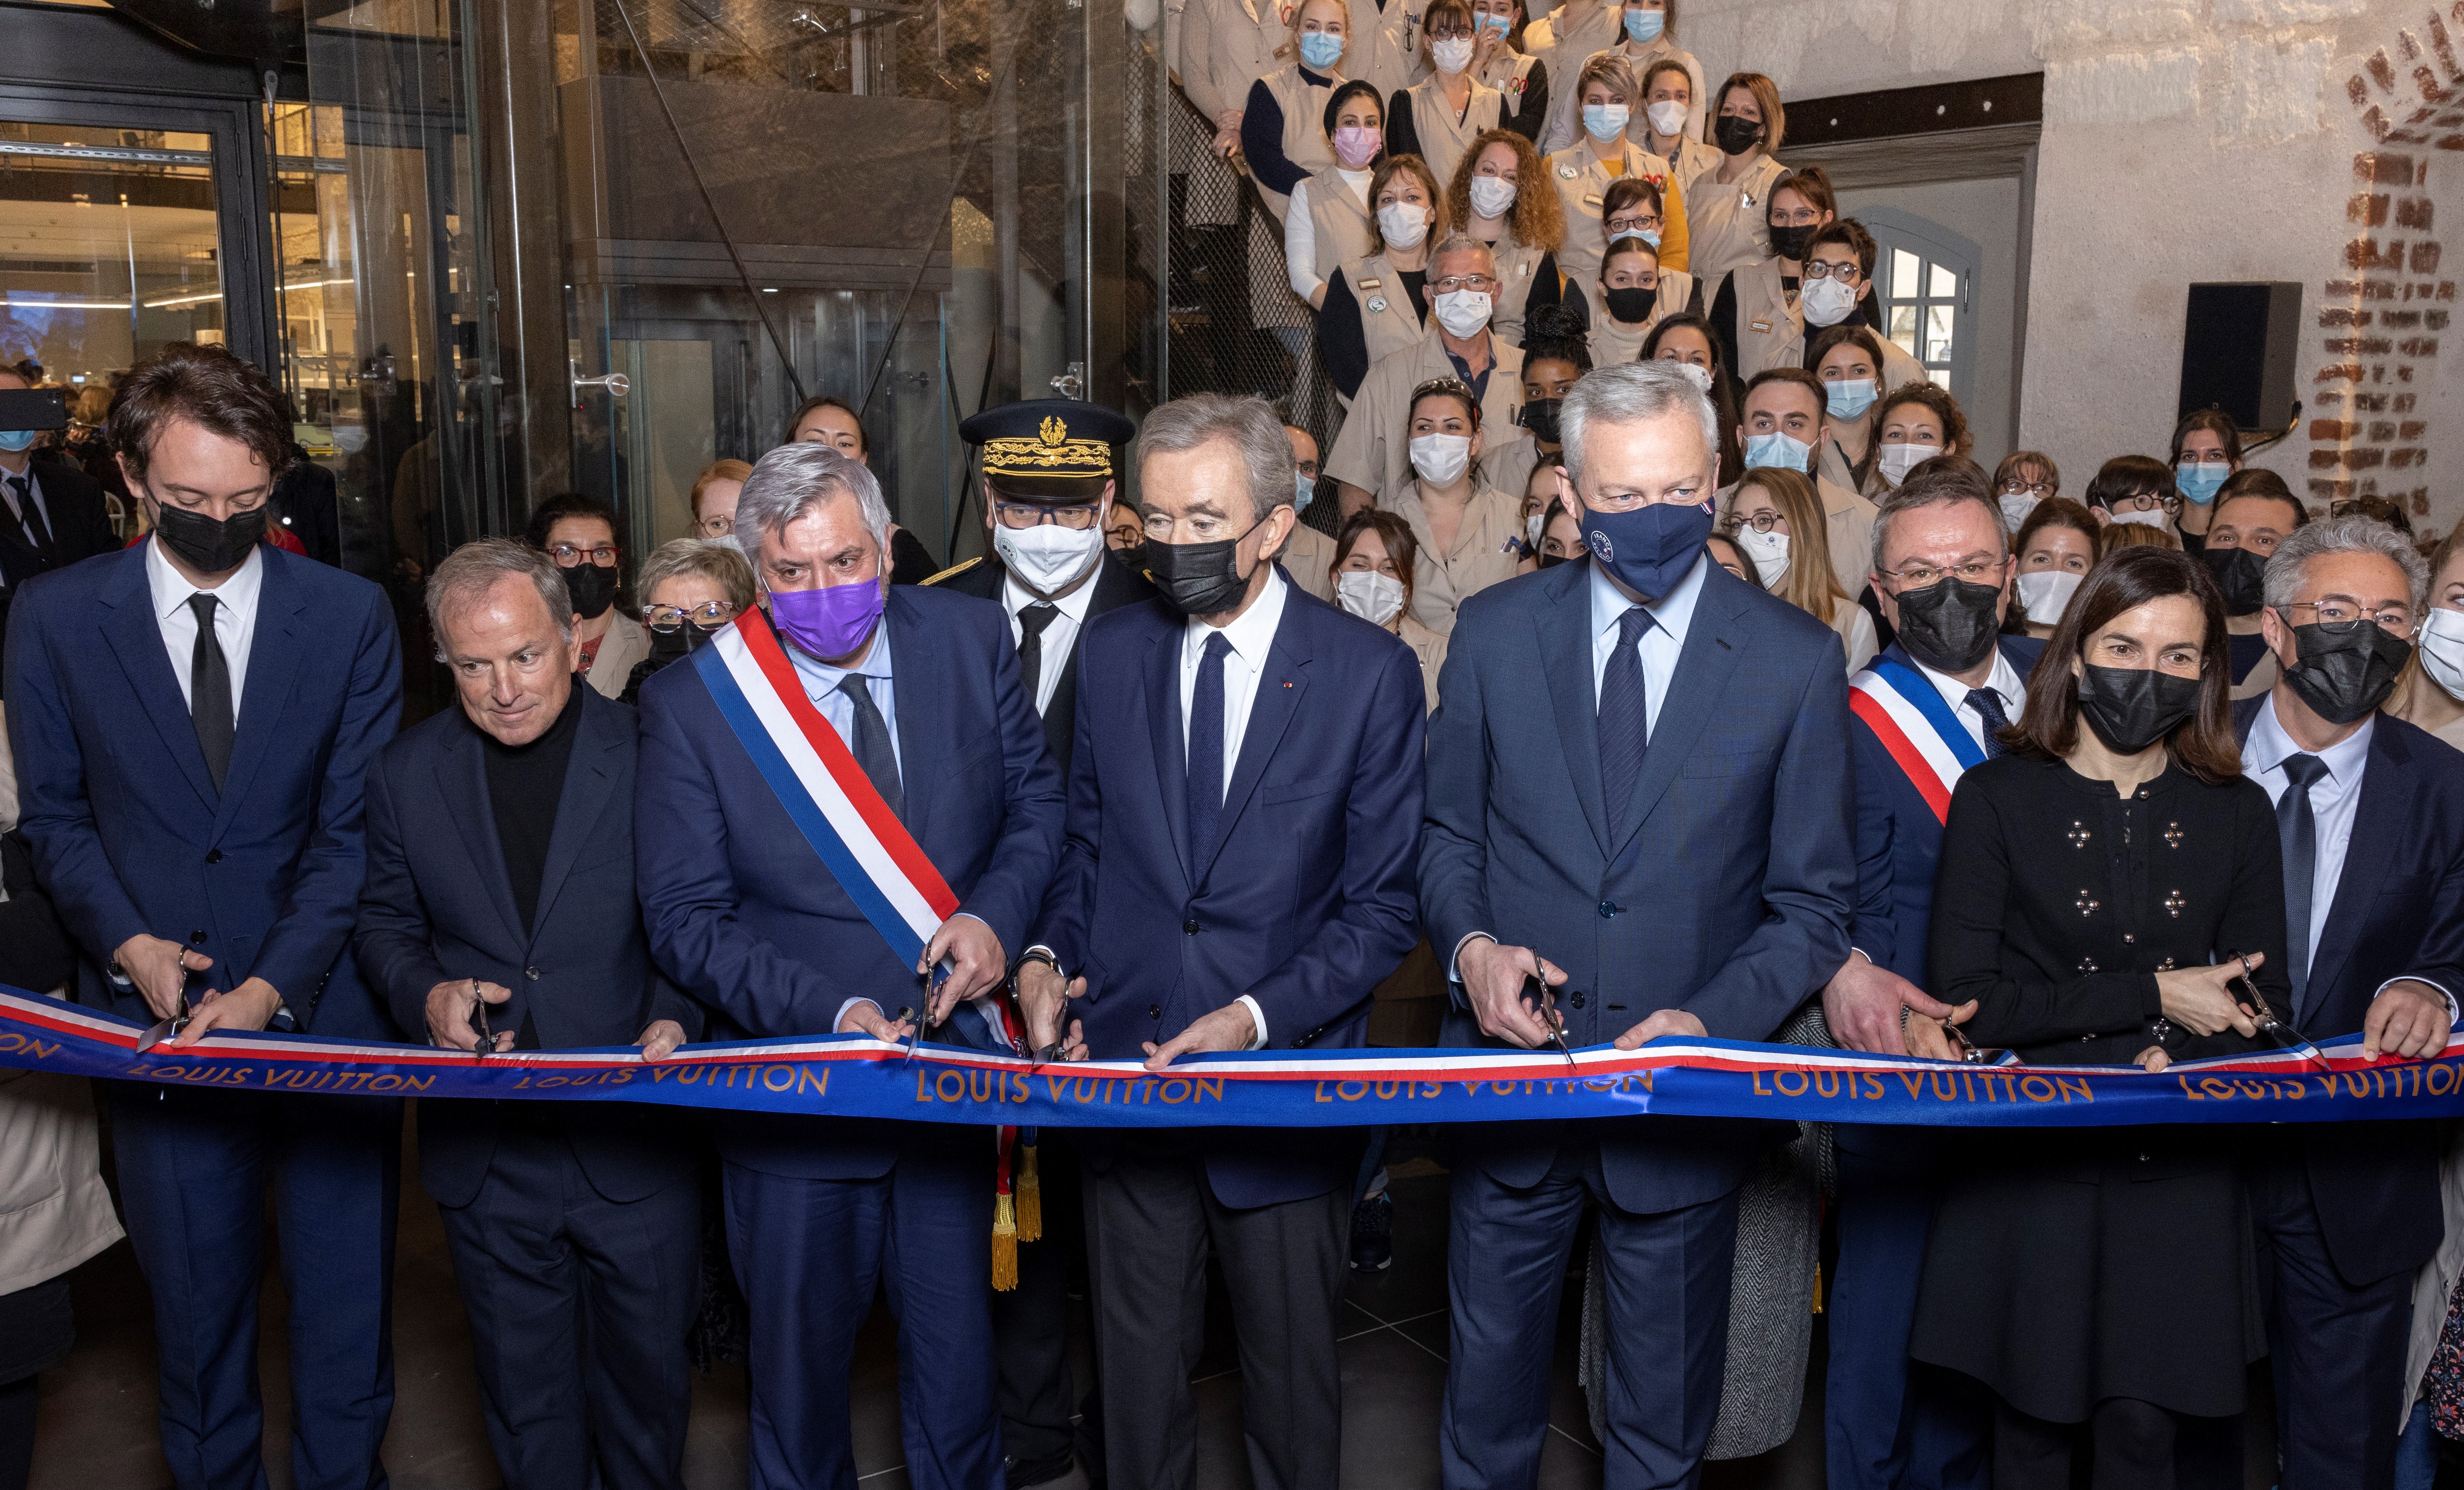 Louis Vuitton retrofits French workshops for mask production amid